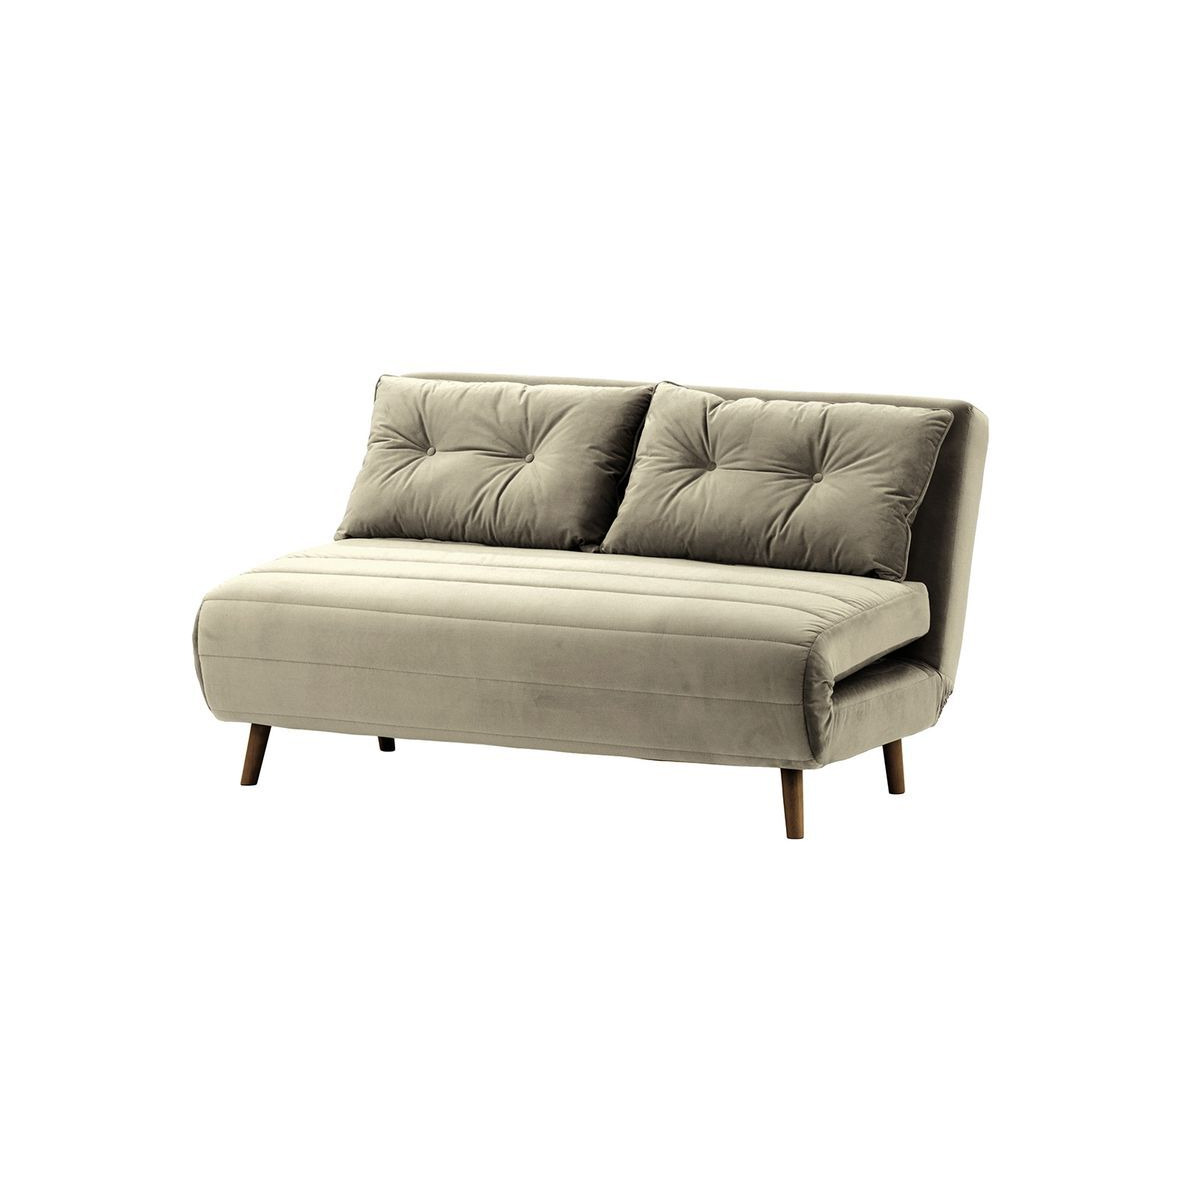 Flic Large Double Sofa Bed - width 142 cm, grey, Leg colour: dark oak - image 1